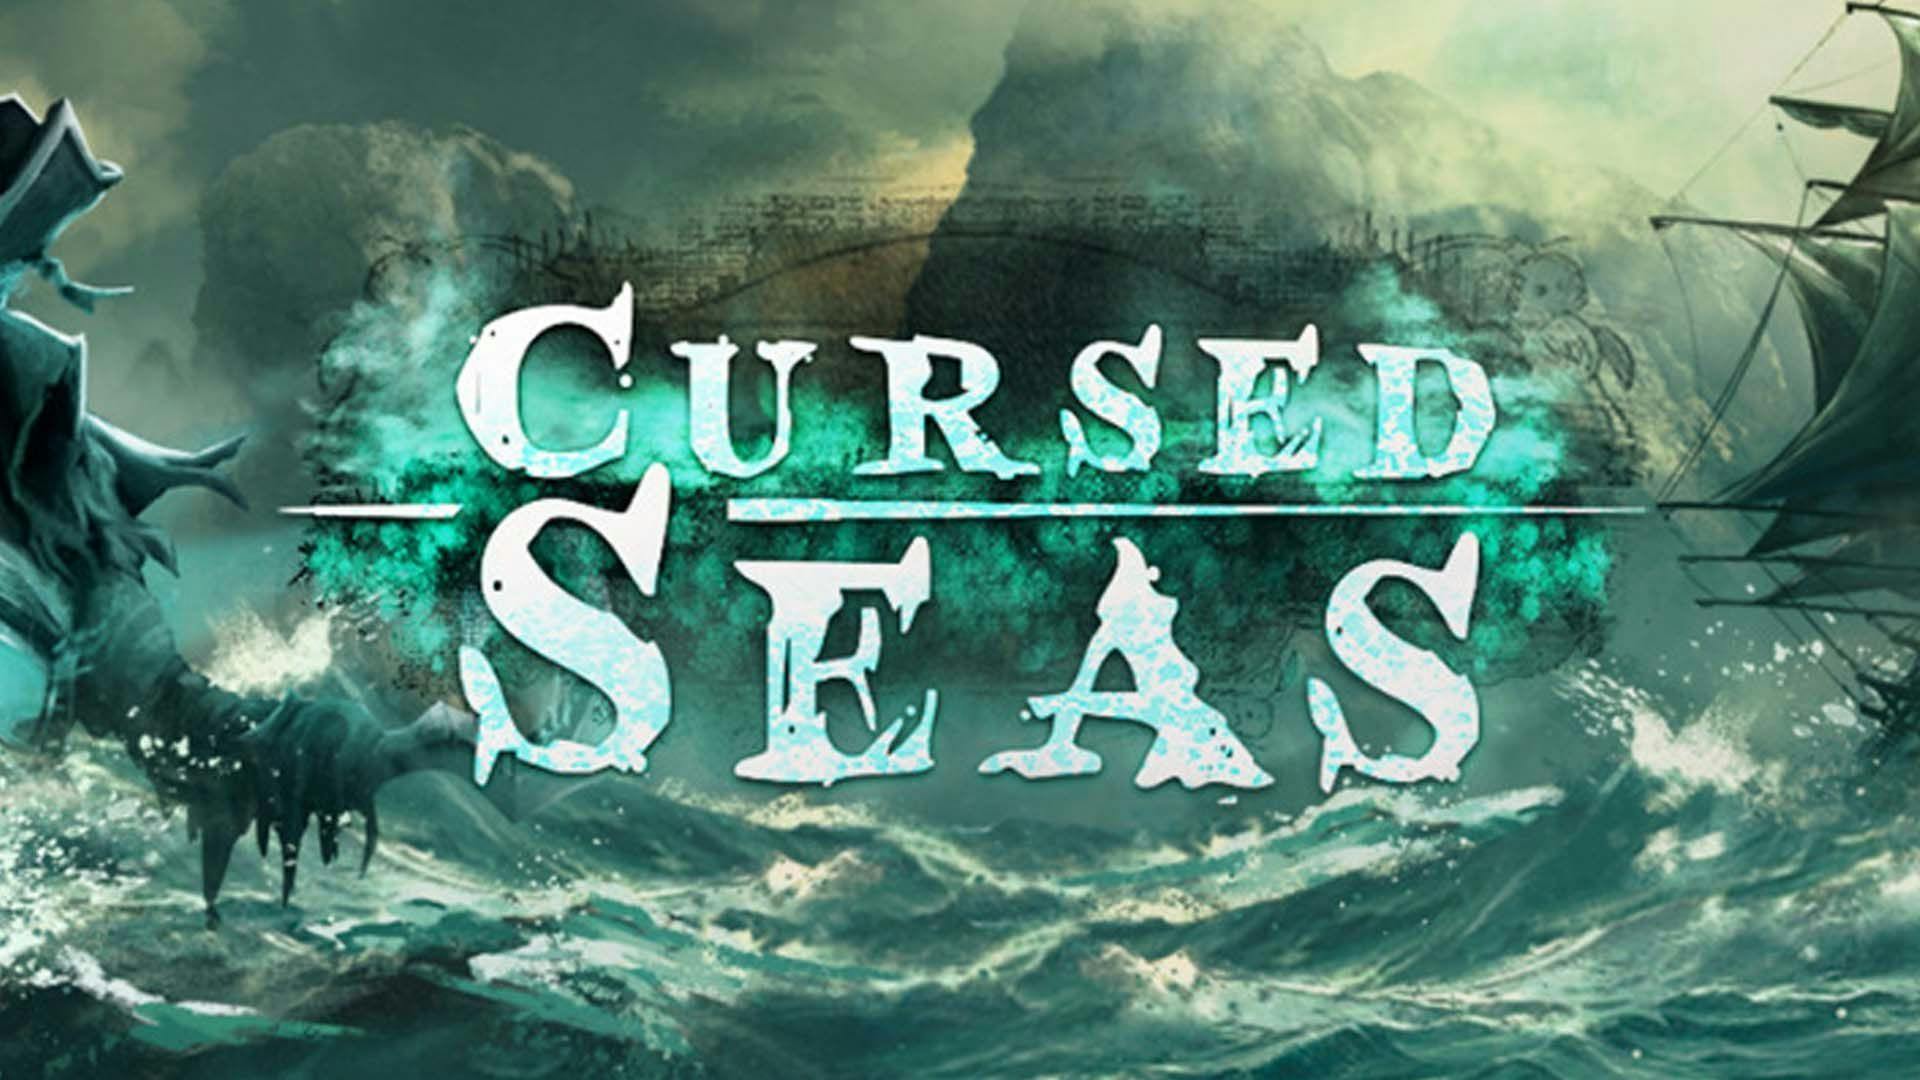 Cursed Seas Slot Machine Online Free Game Play